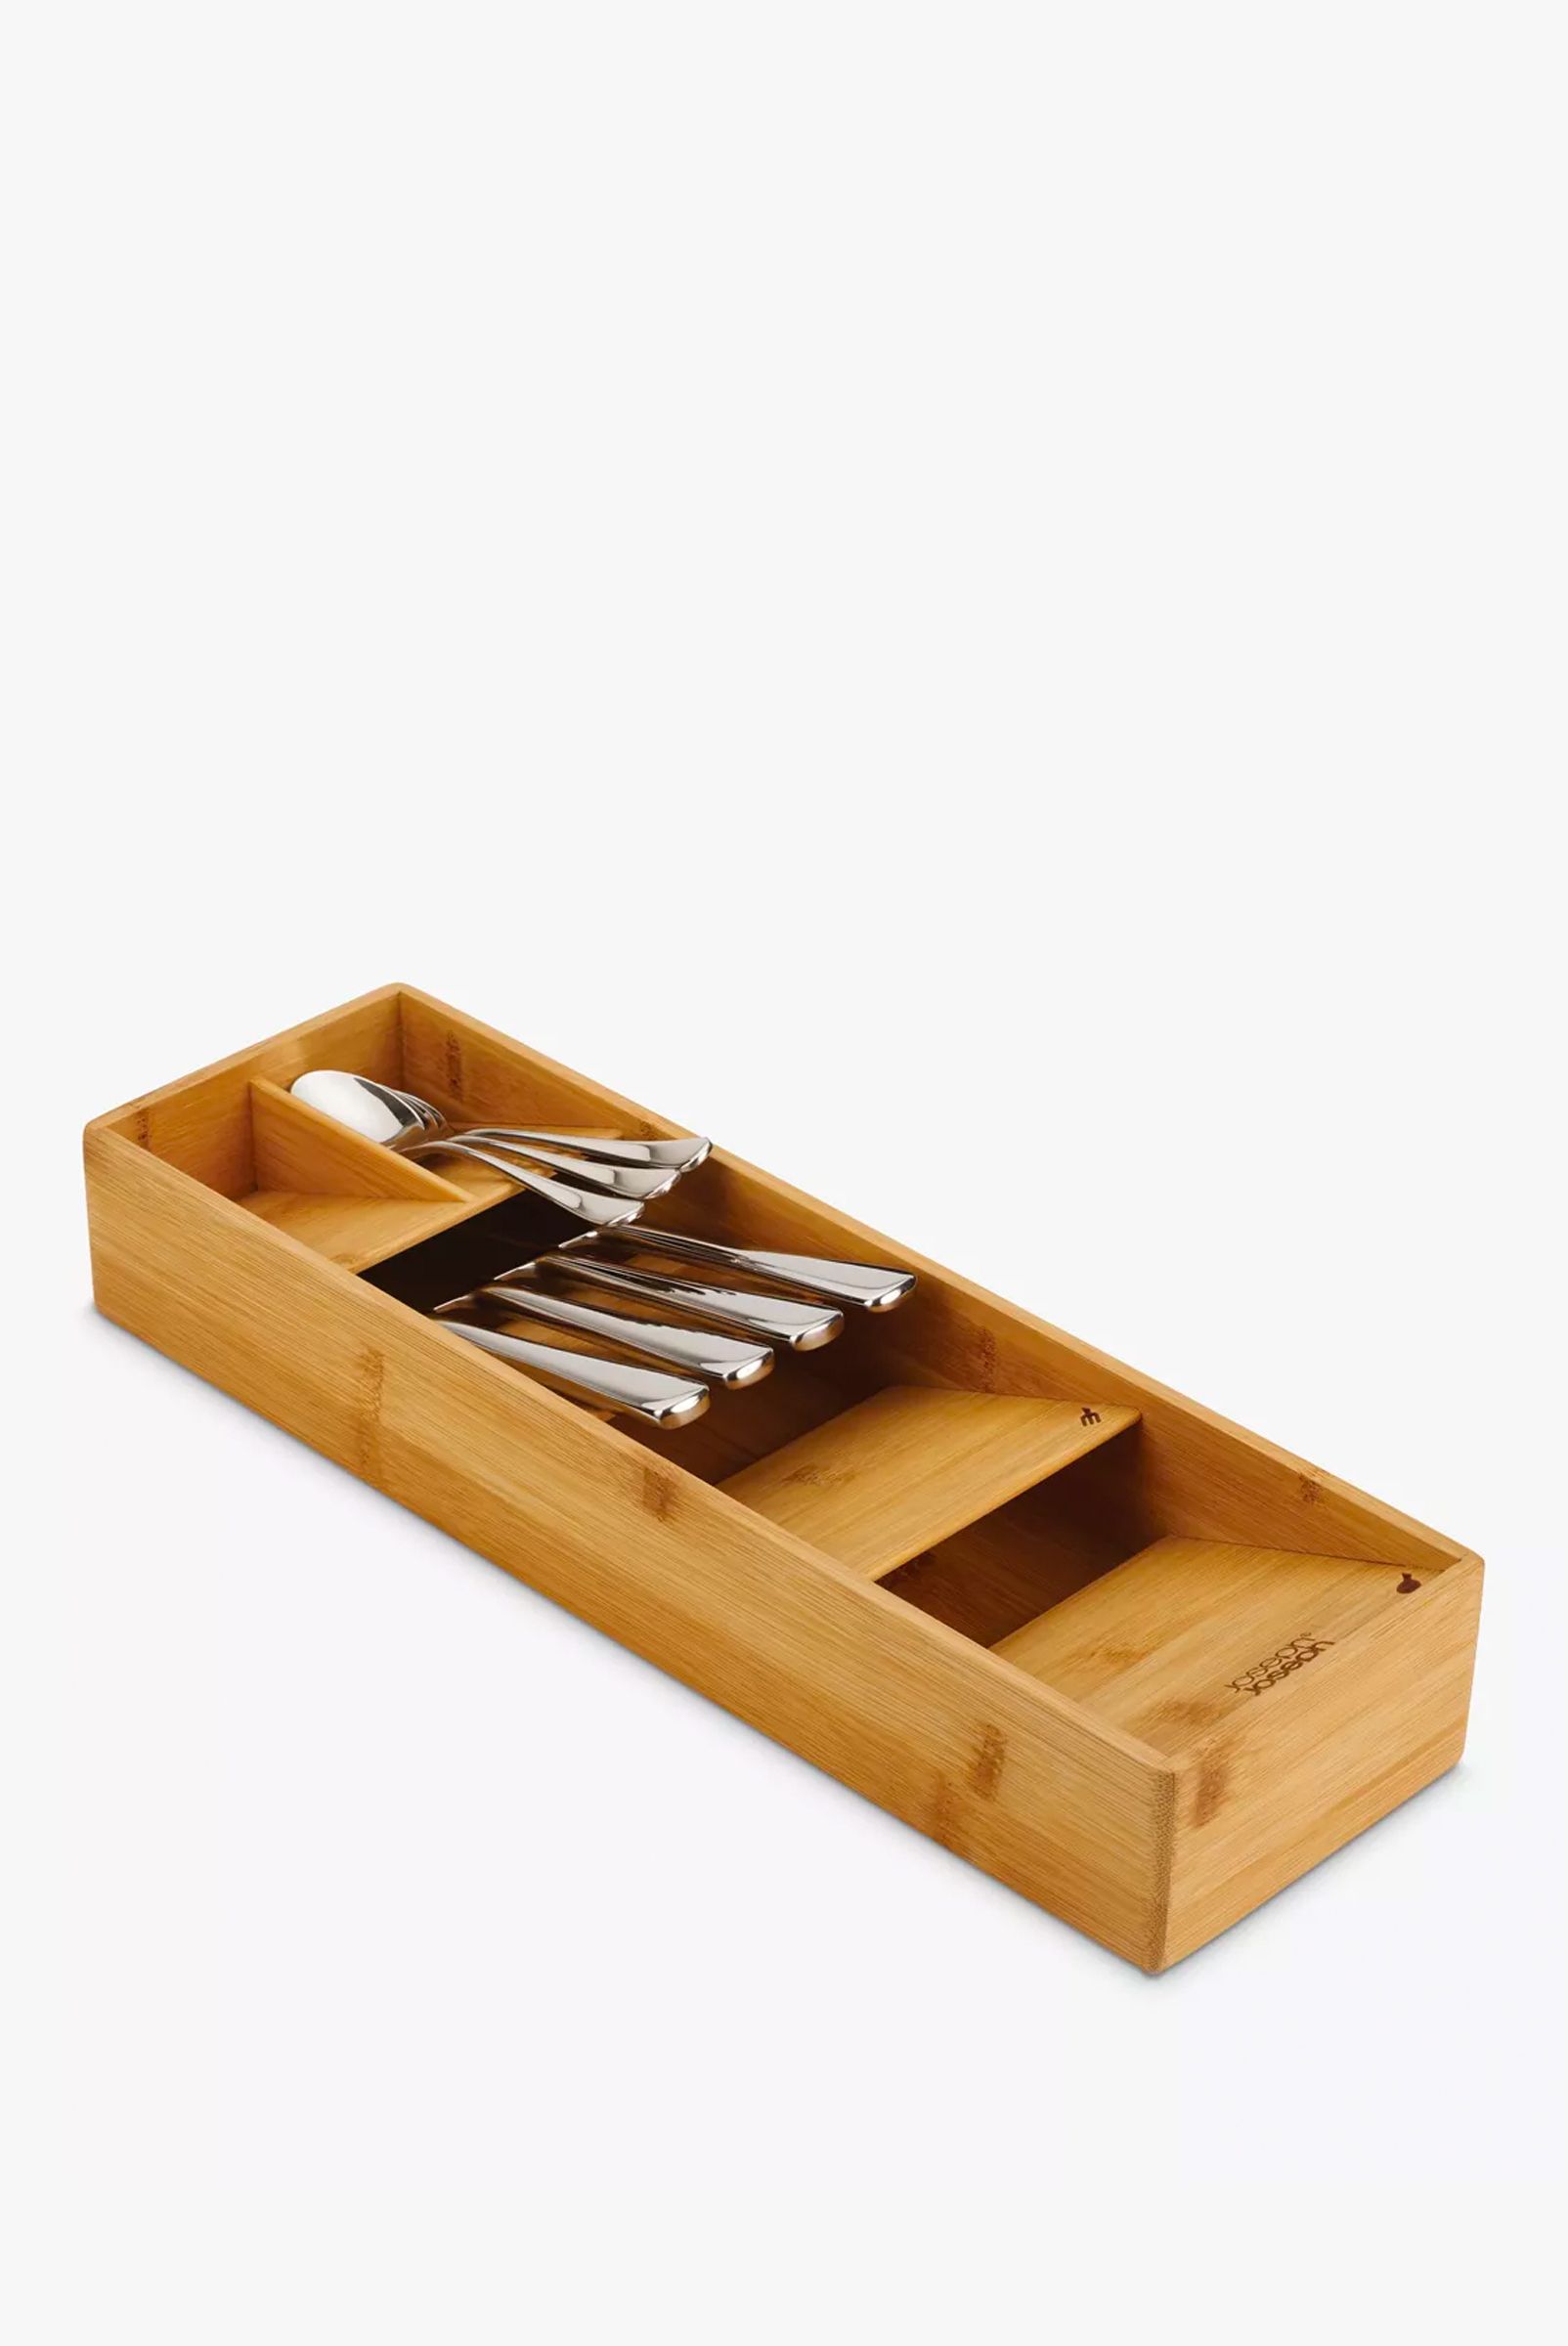 Joseph Joseph DrawerStore Bamboo Compact Cutlery Organiser, £21.99